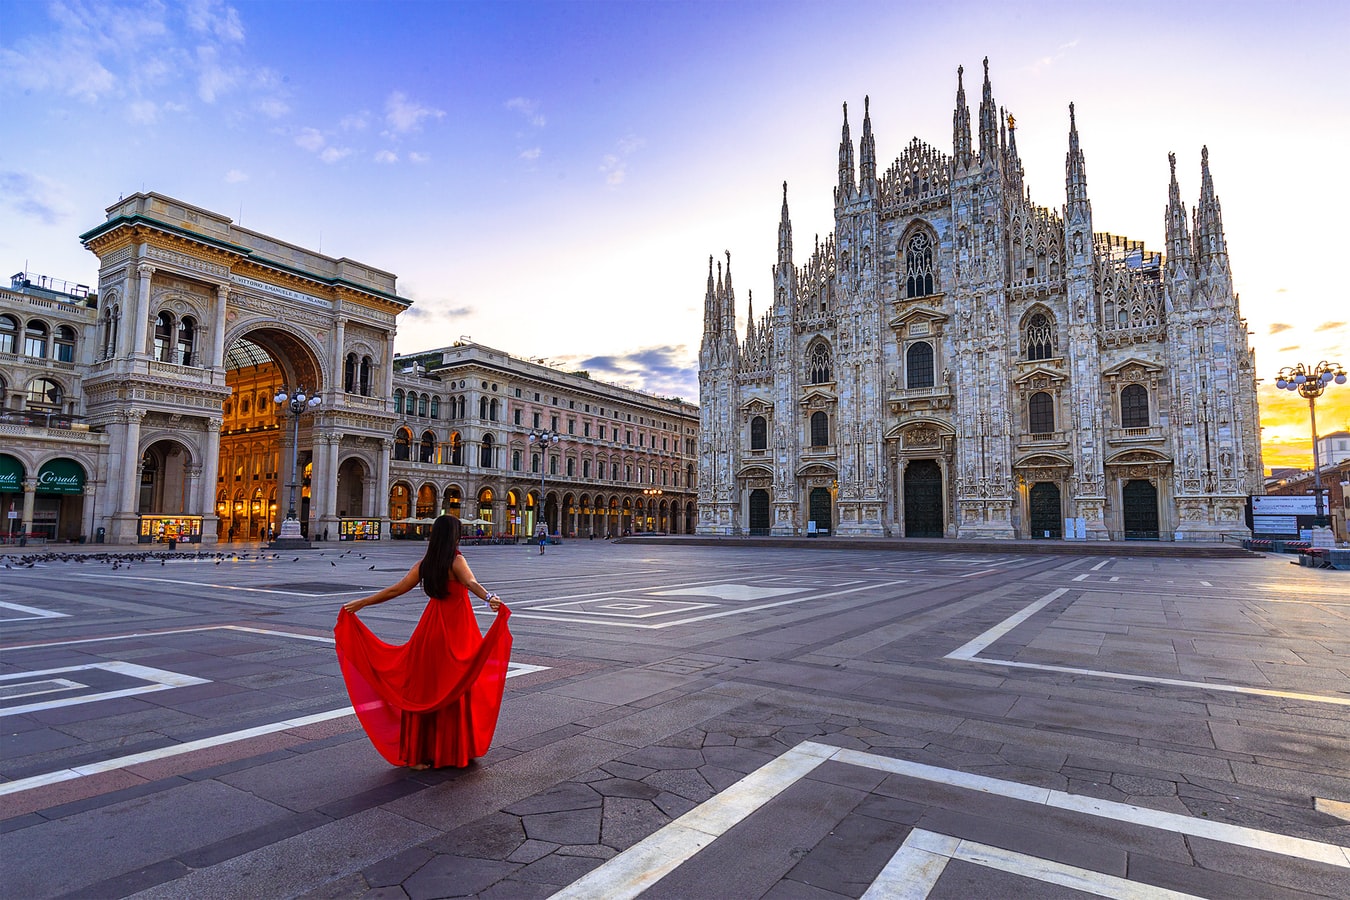 Metropolitan City of Milan, Italy (Photo: Daniil Vnoutchkov)